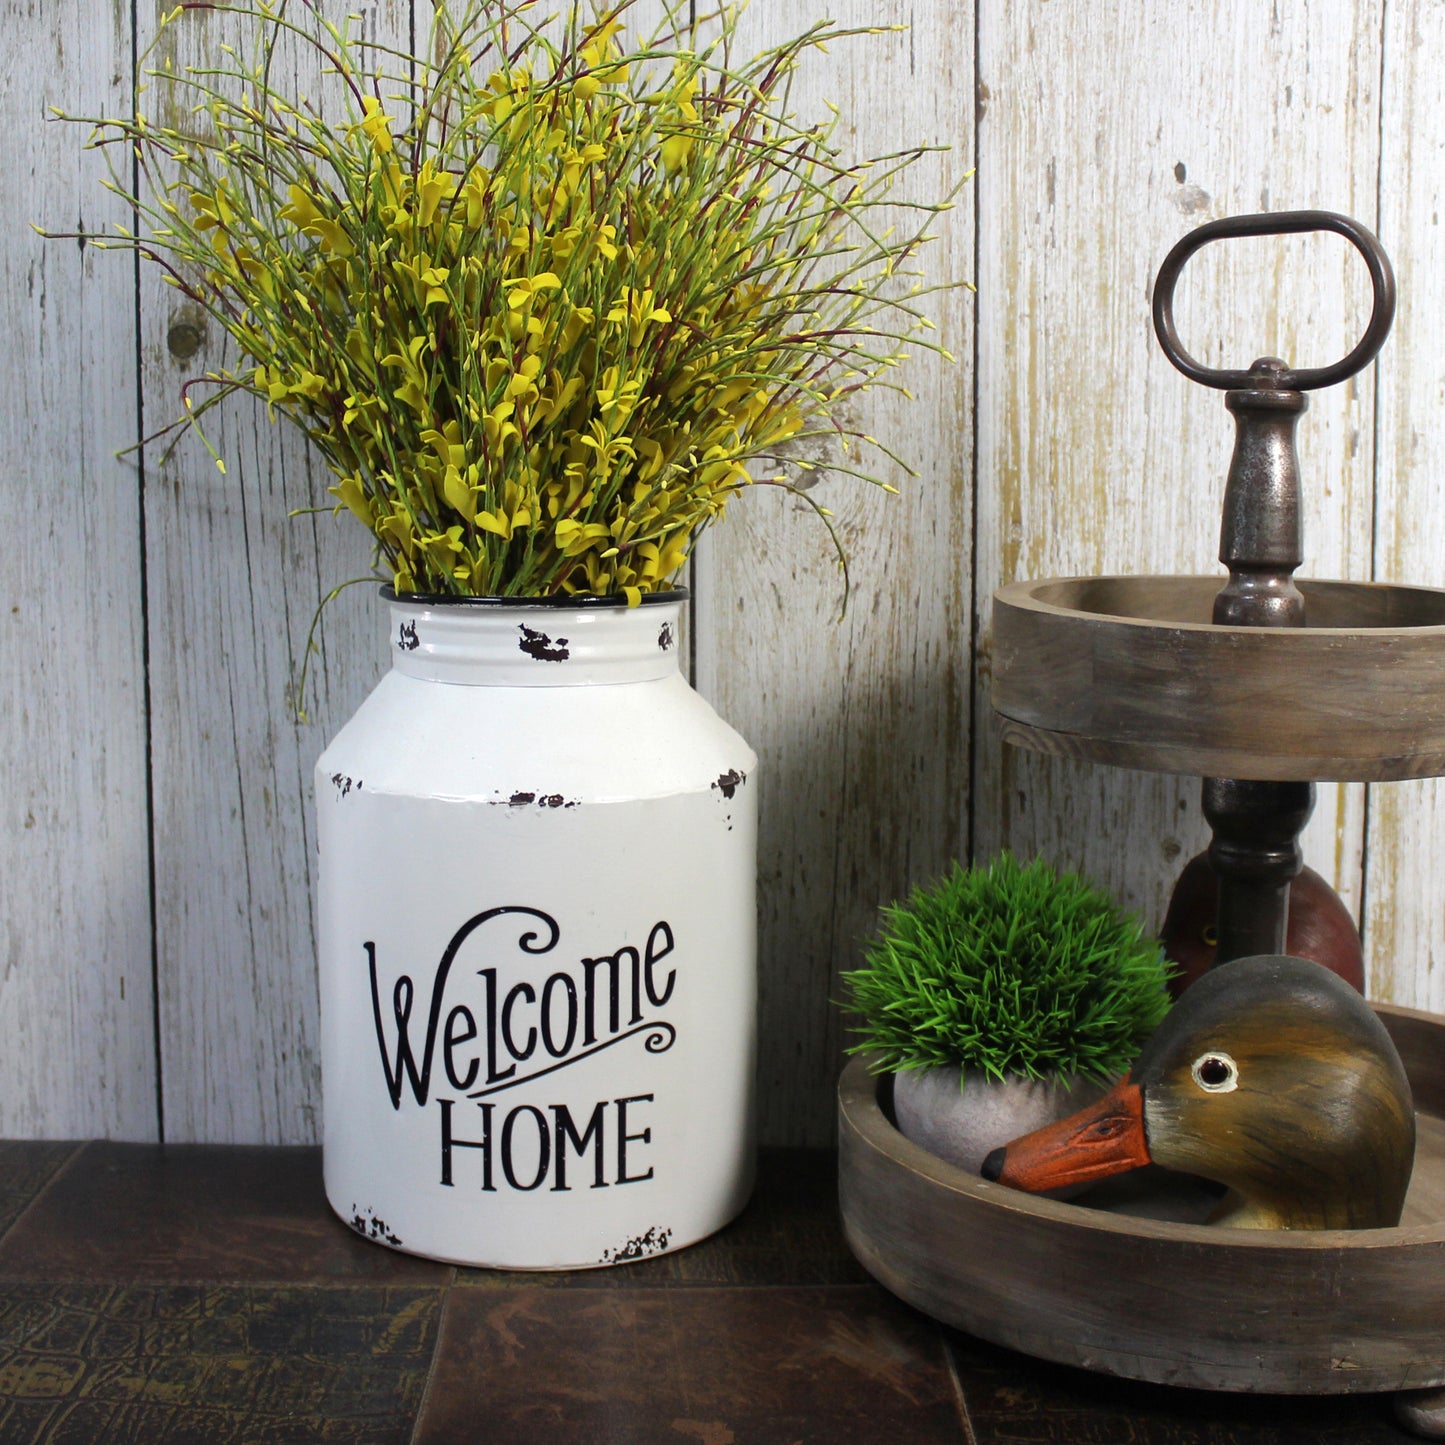 CVHOMEDECO. Primitive Rustic Galvanized Tin Half Round Jug Vase Metal Wall Hanging Flower Holder for Home and Garden Decor, Vintage White